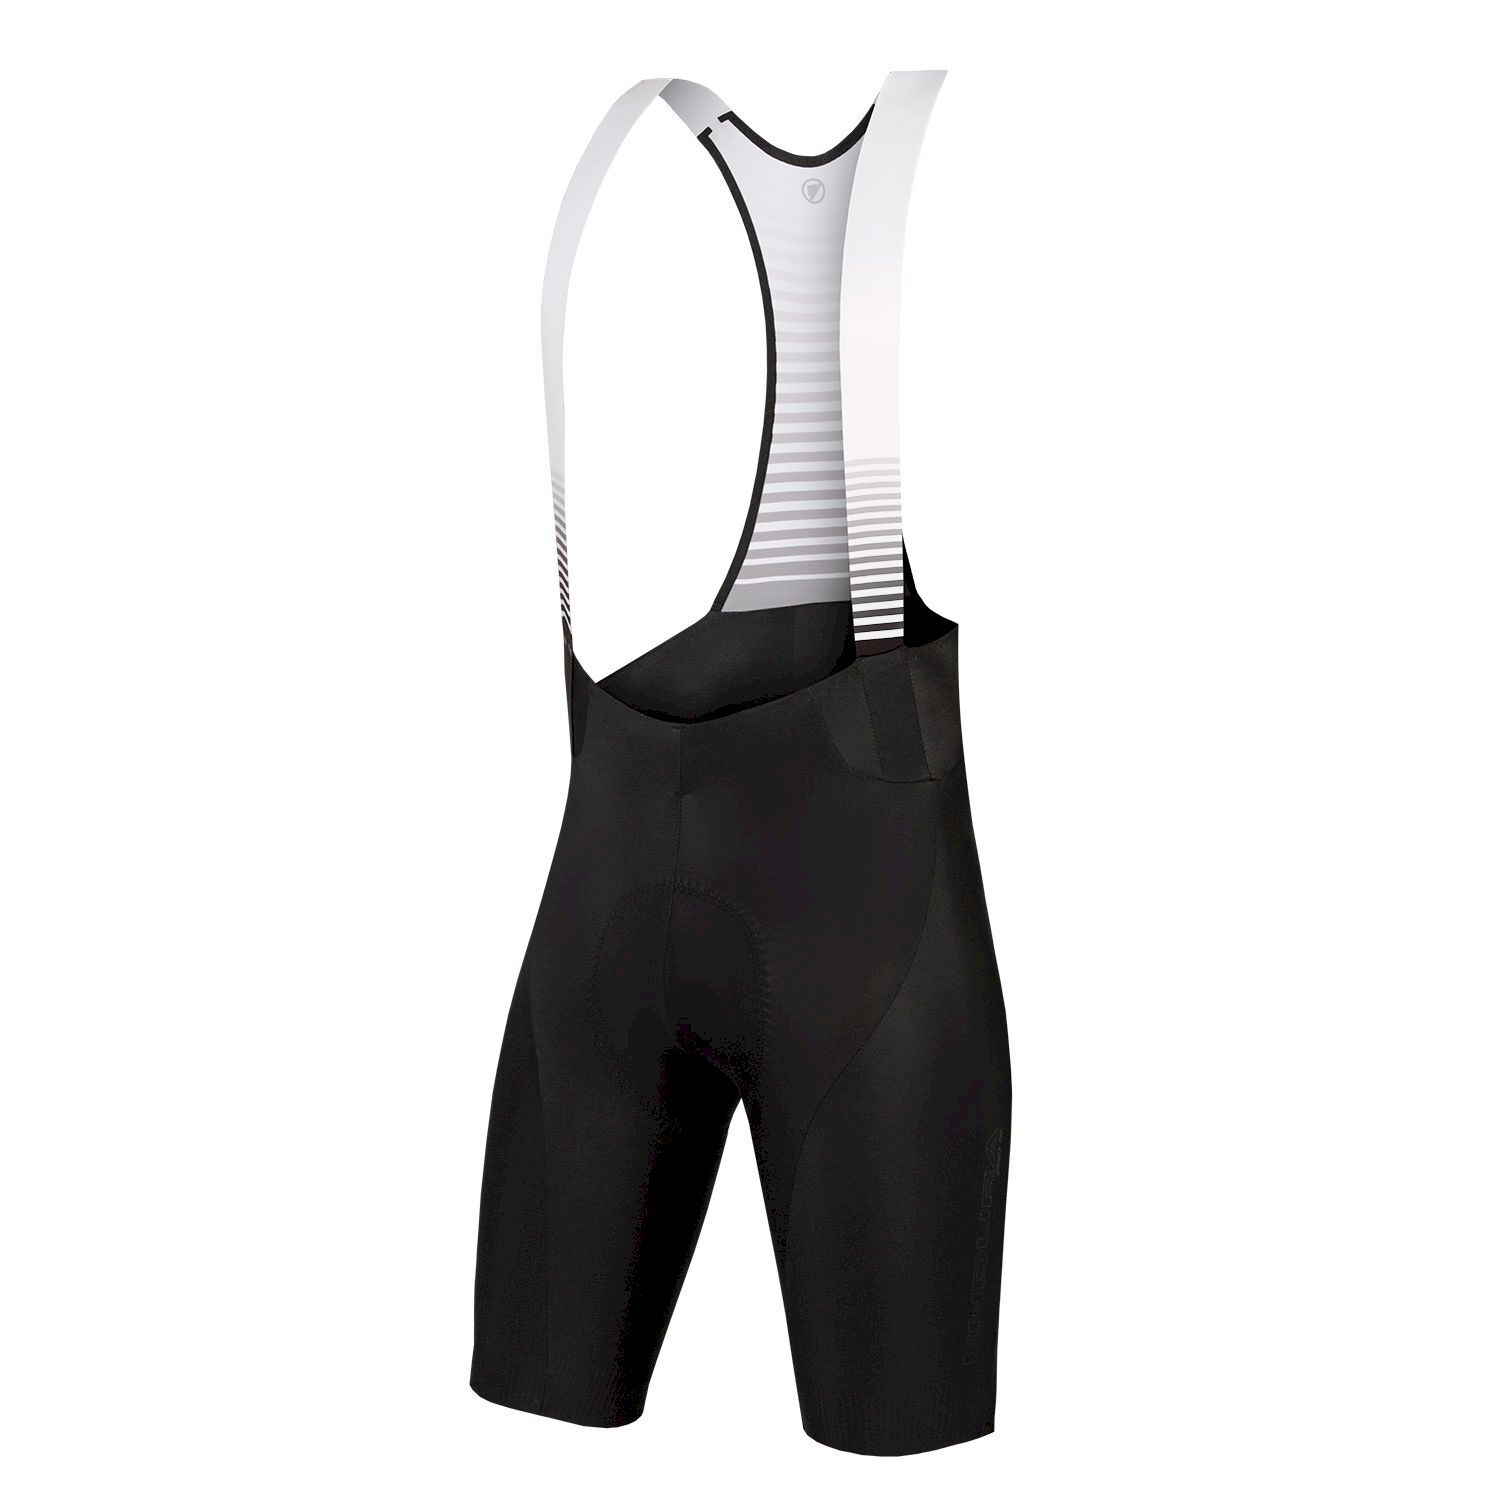 Endura Pro SL Bibshort Wide Pad - Cycling shorts - Men's